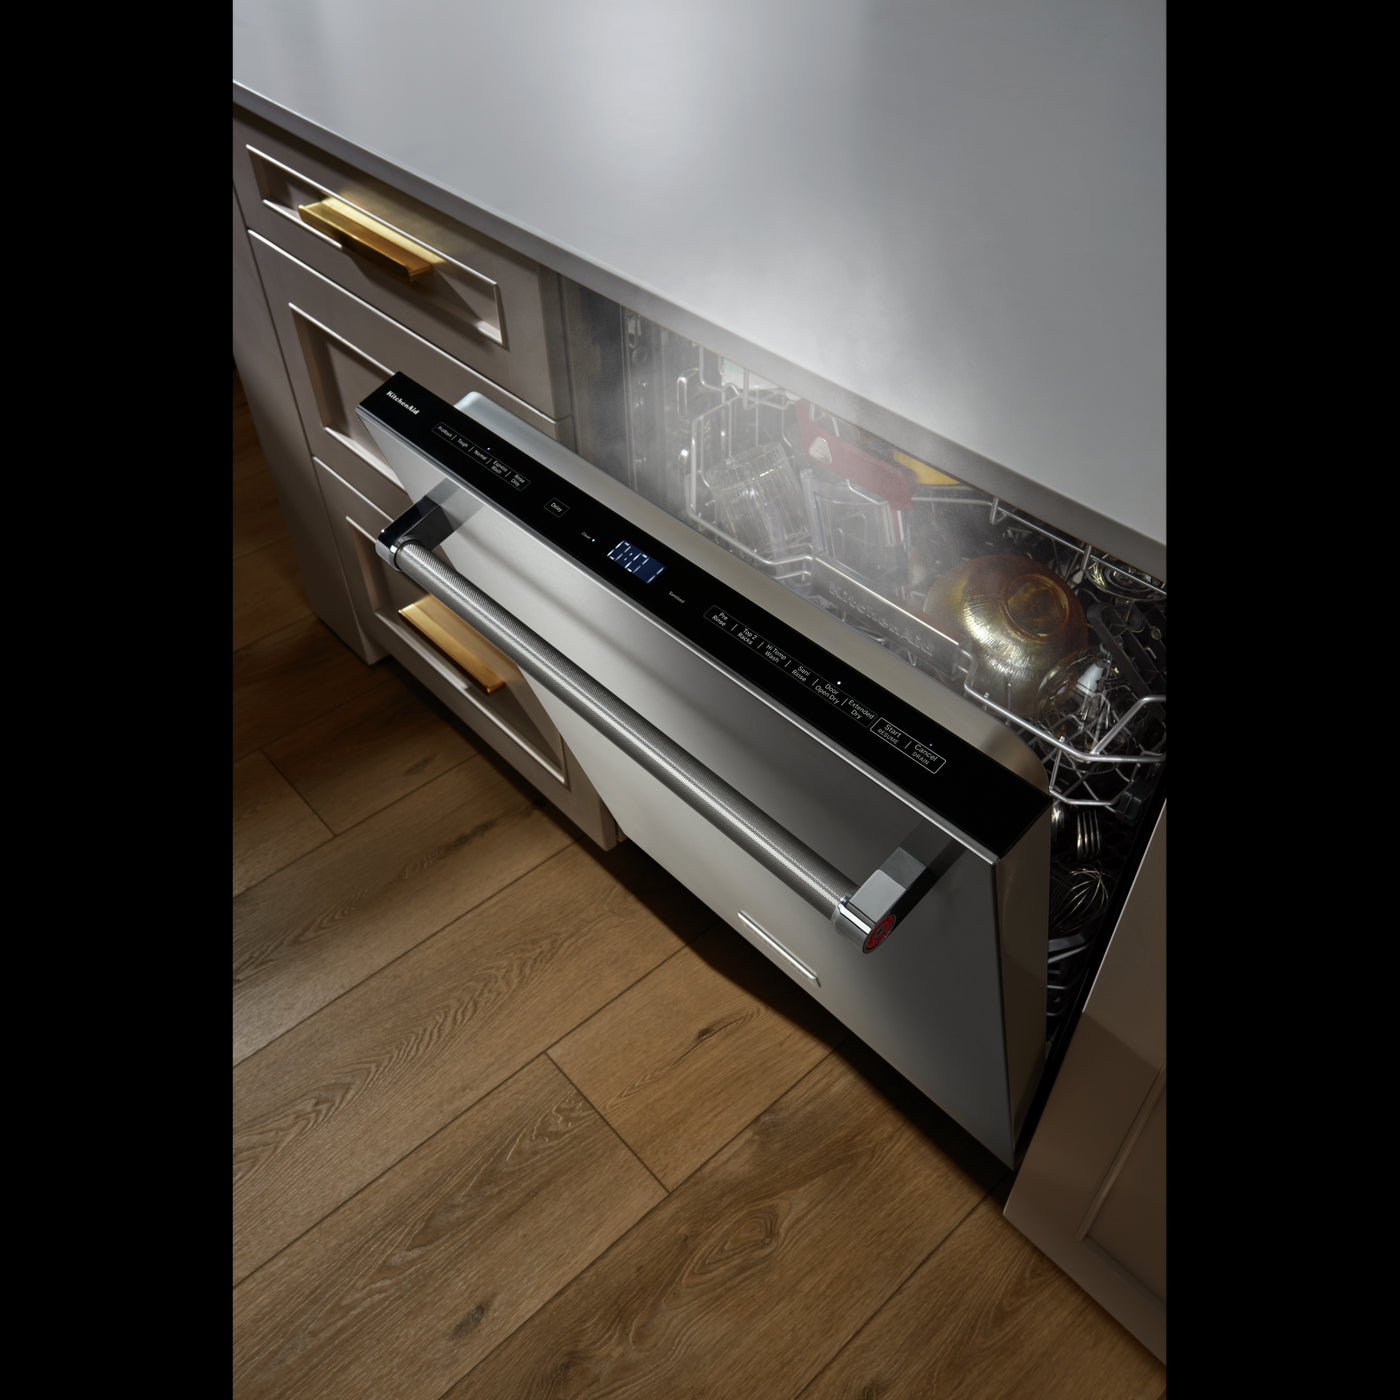 KitchenAid Stainless Steel Dishwasher with PrintShield™ Finish - KDTF924PPS